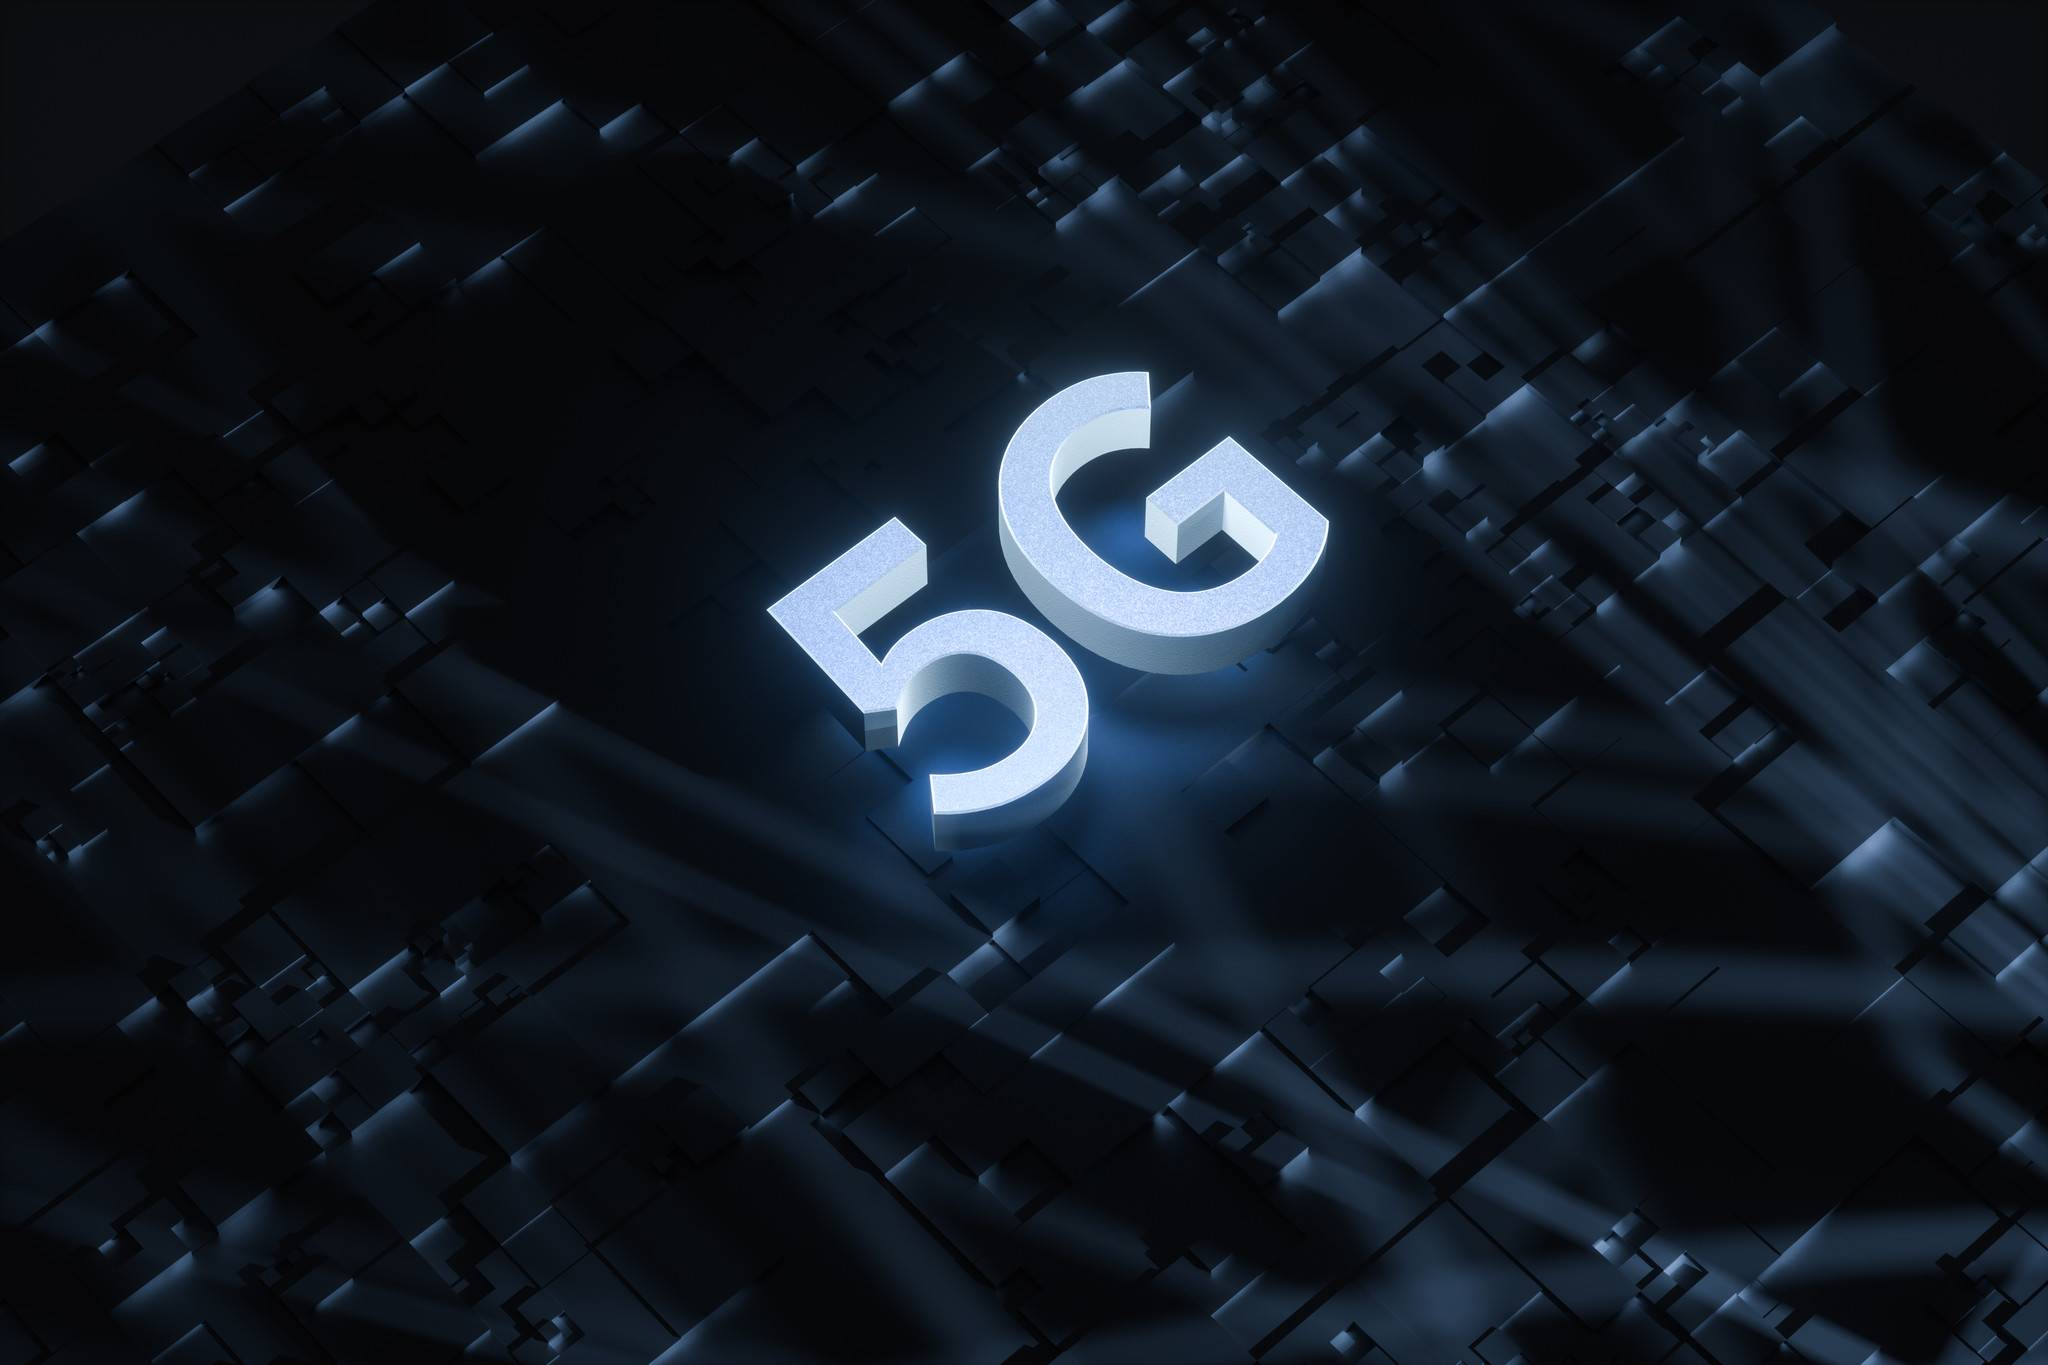 5G 与 4G 的差异：科技革新性突破，网速迅疾如雷，连接大量设备的潜能巨大  第7张